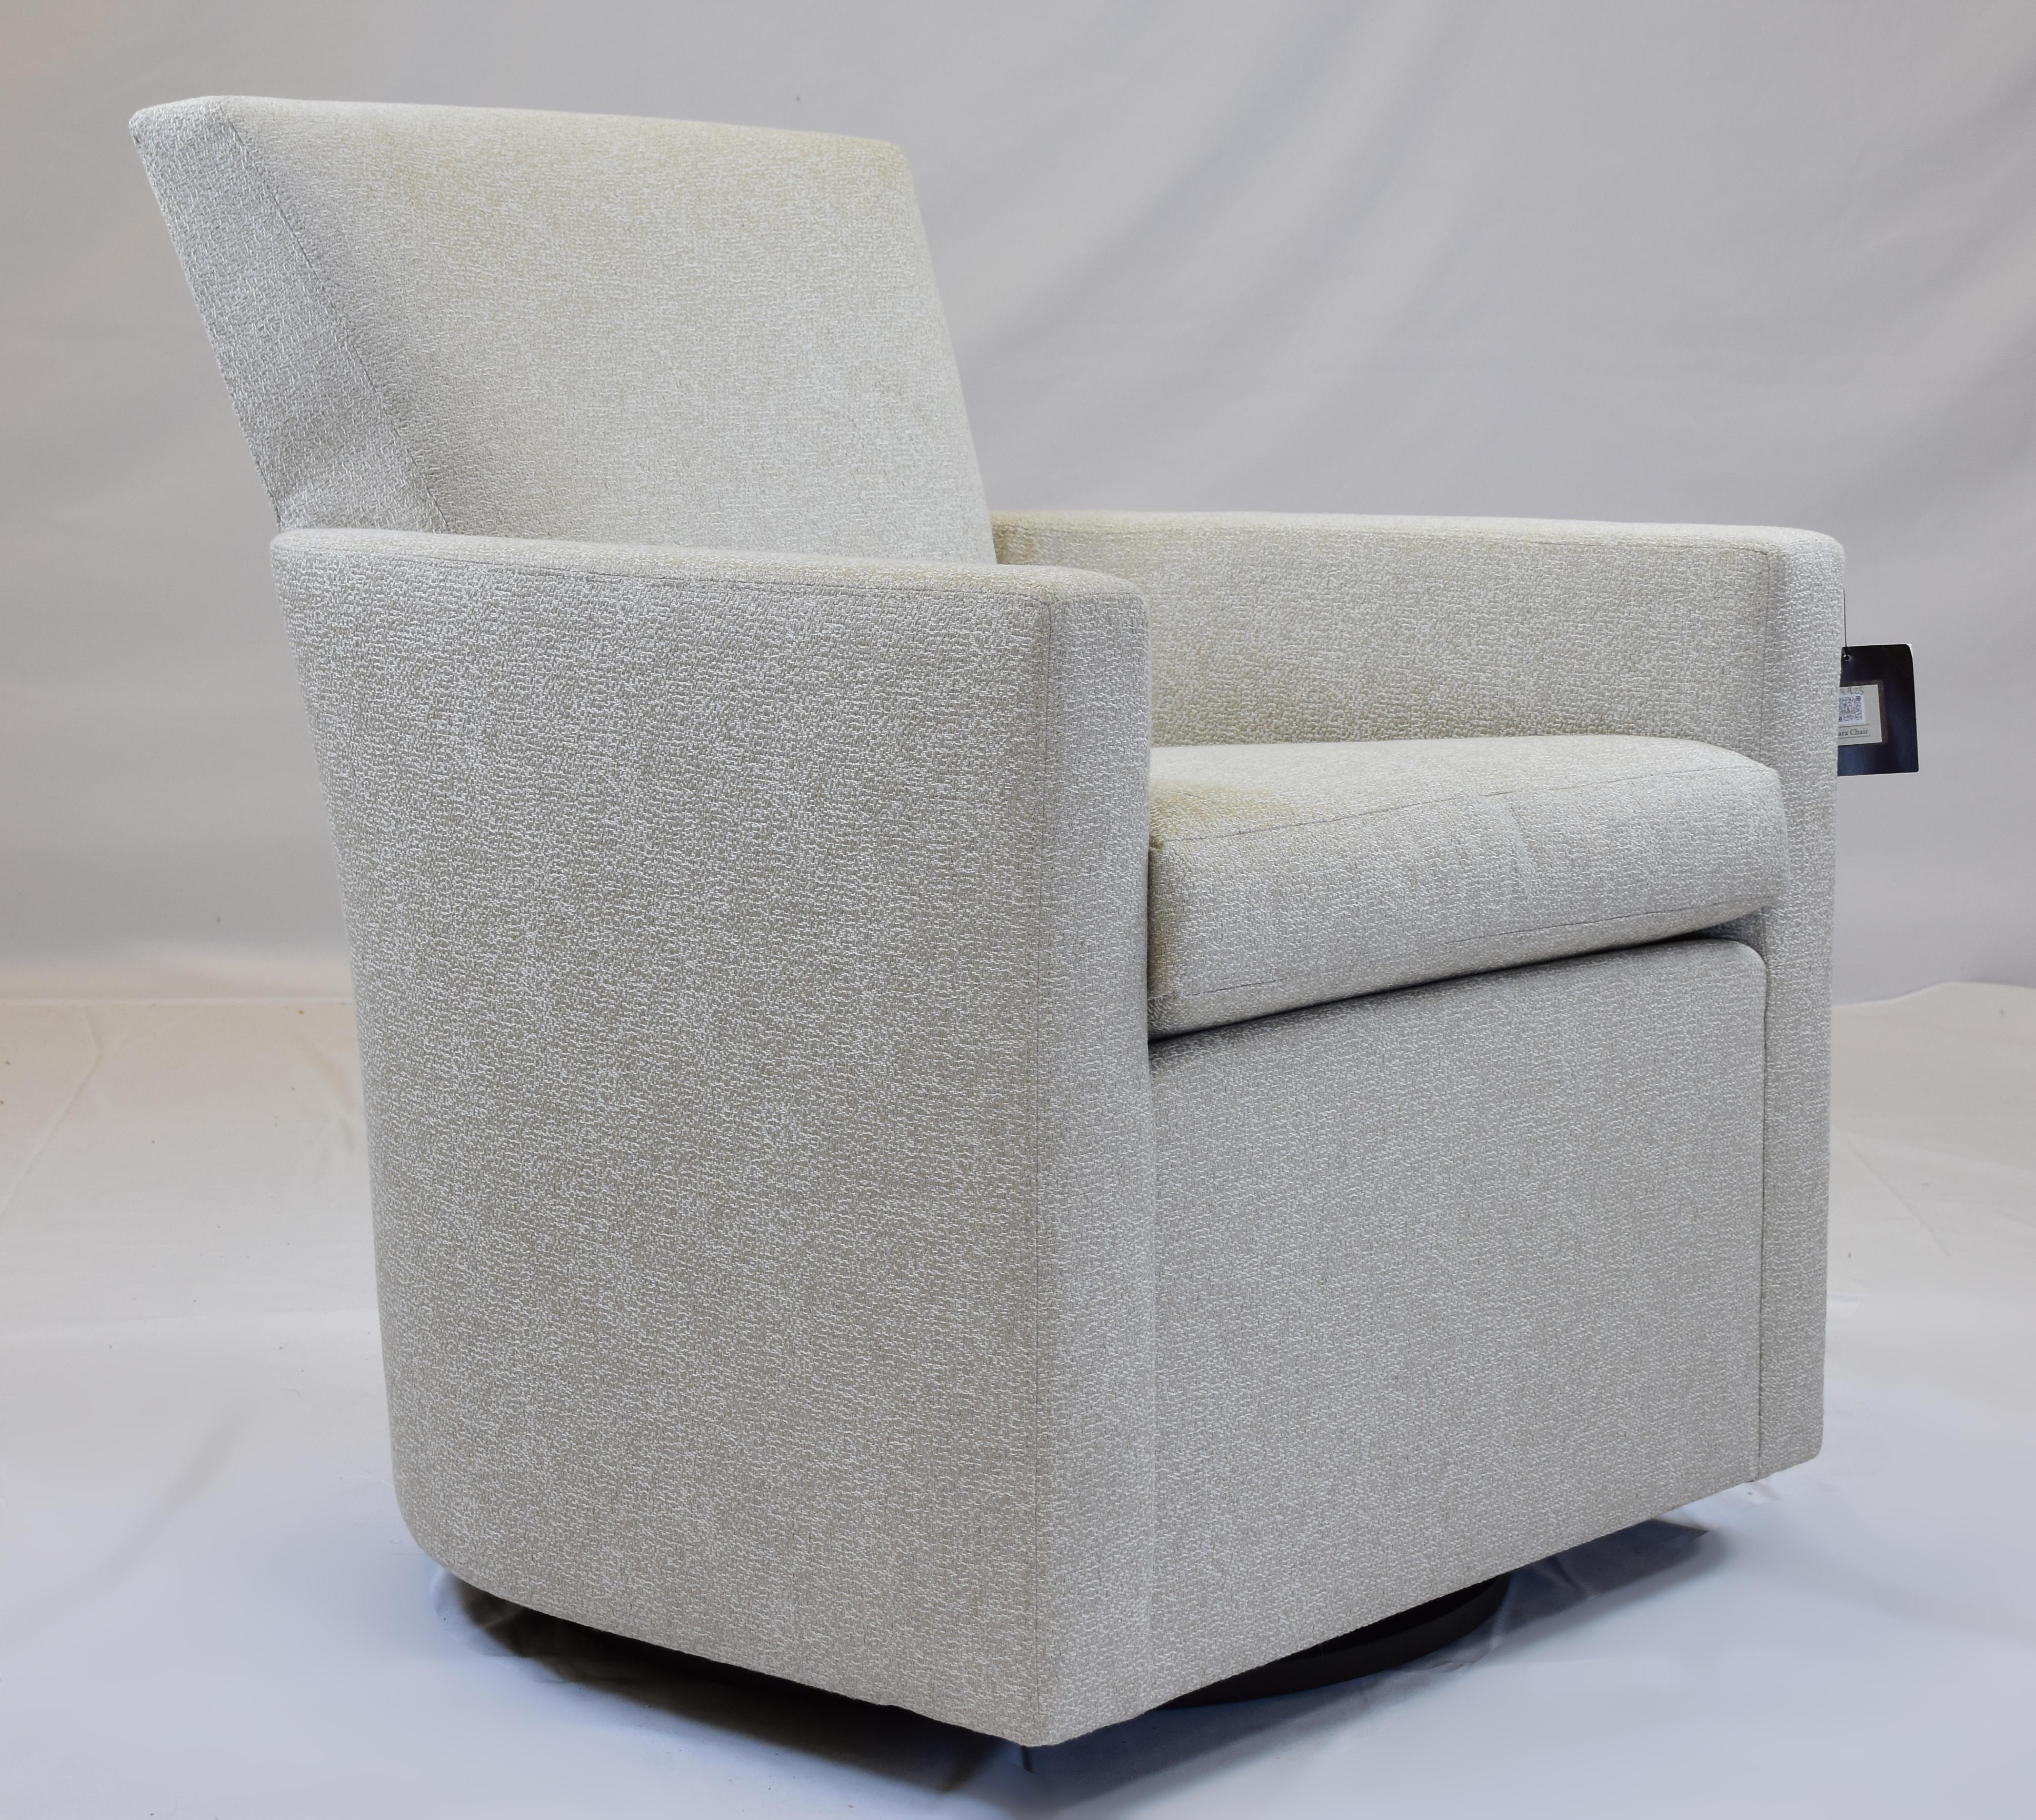 American Le Jeune Upholstery Barrel Swivel Kara Chair Showroom Model, 2 Available For Sale